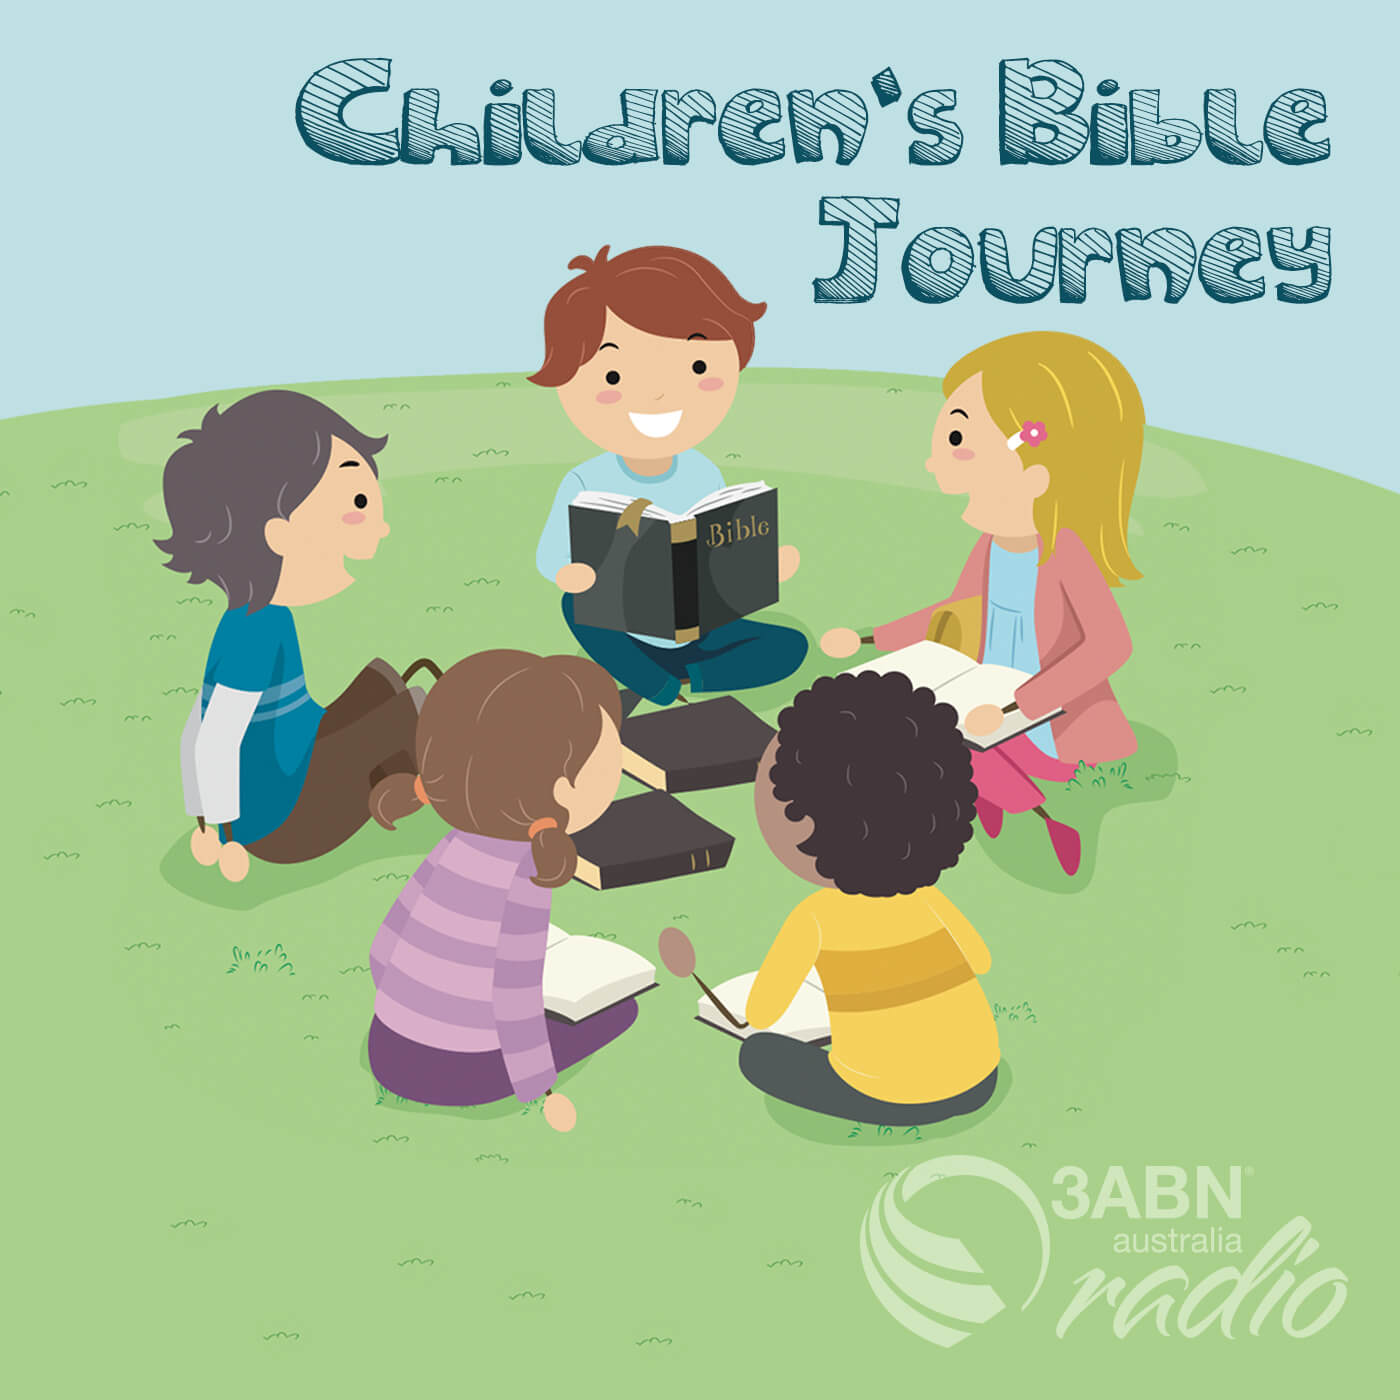 Children's Bible Journey - 2210